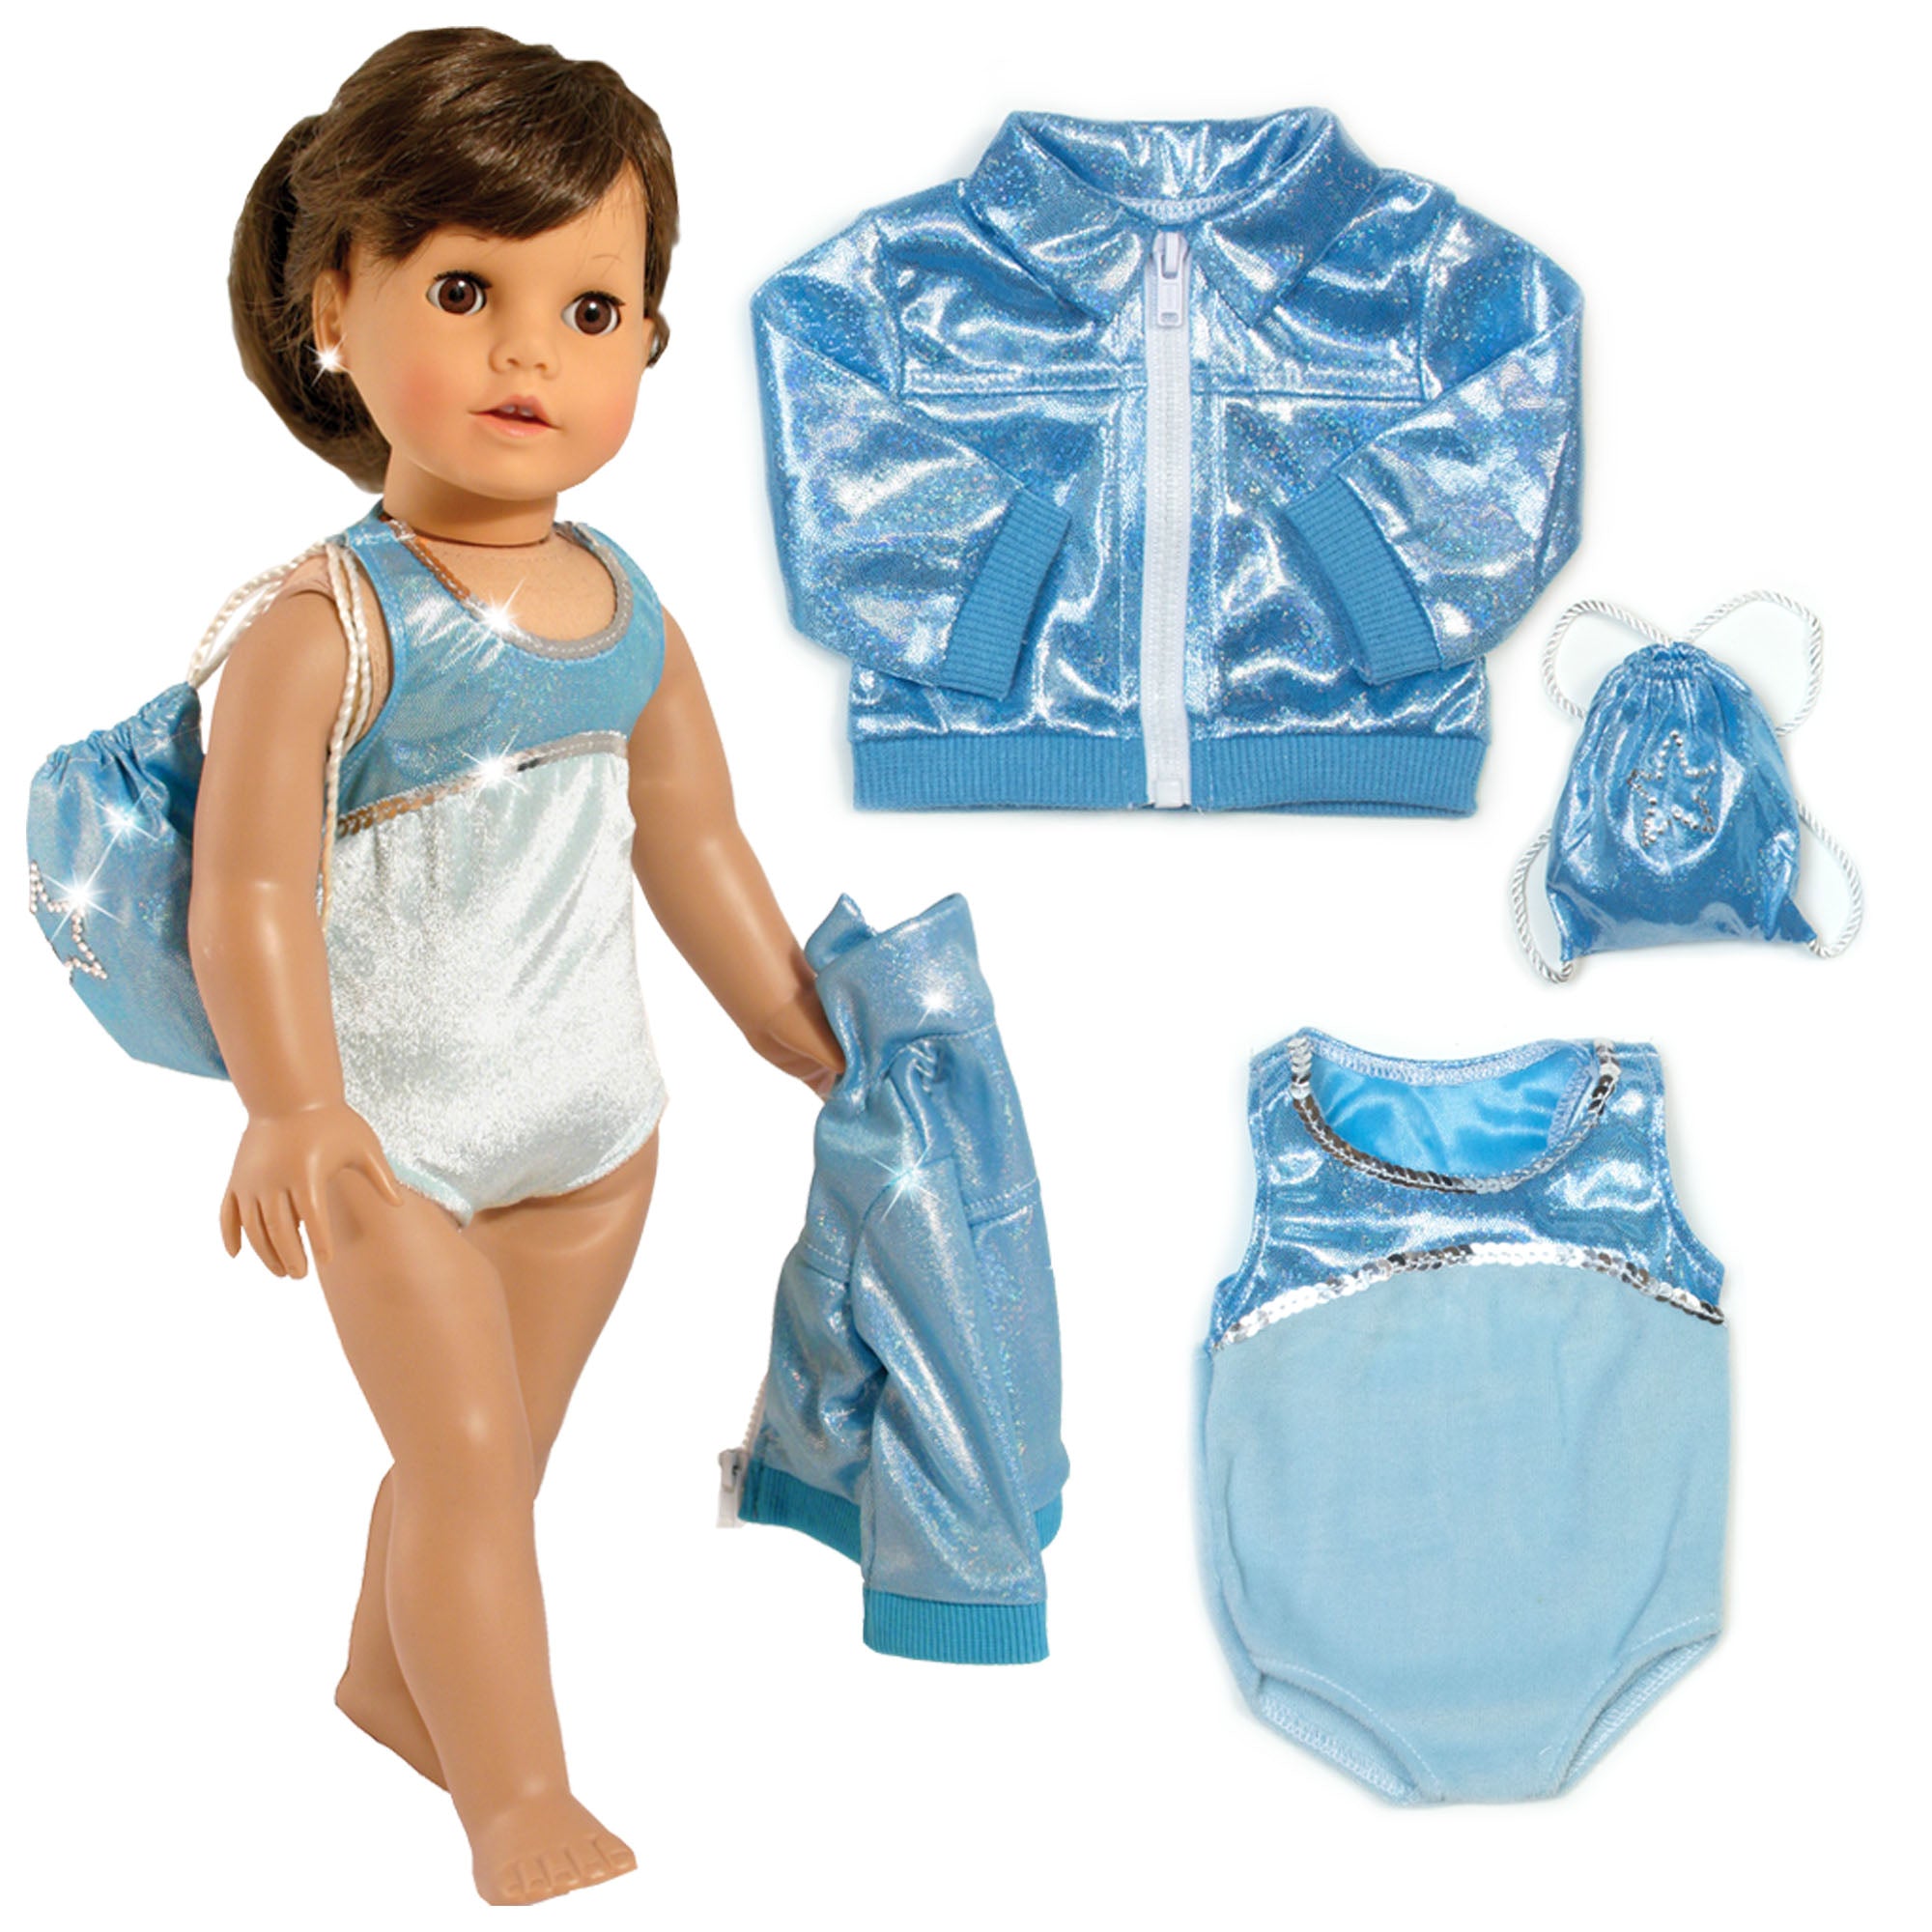 Sophia's Gymnastics Outfit Set for 18'' Dolls, Aqua